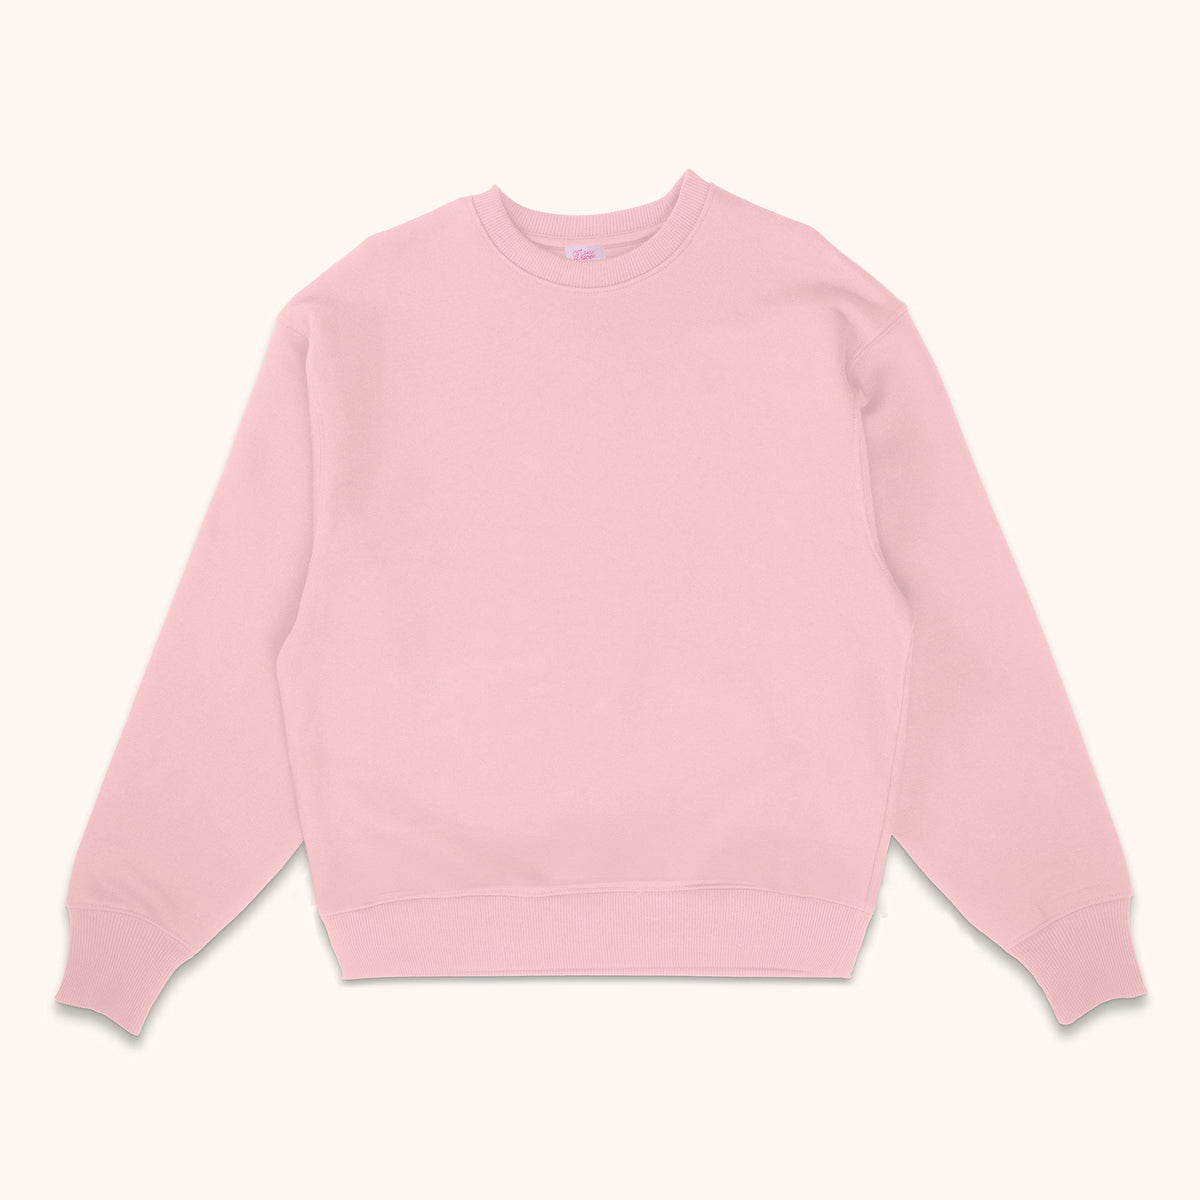 Custom Club Sweatshirt